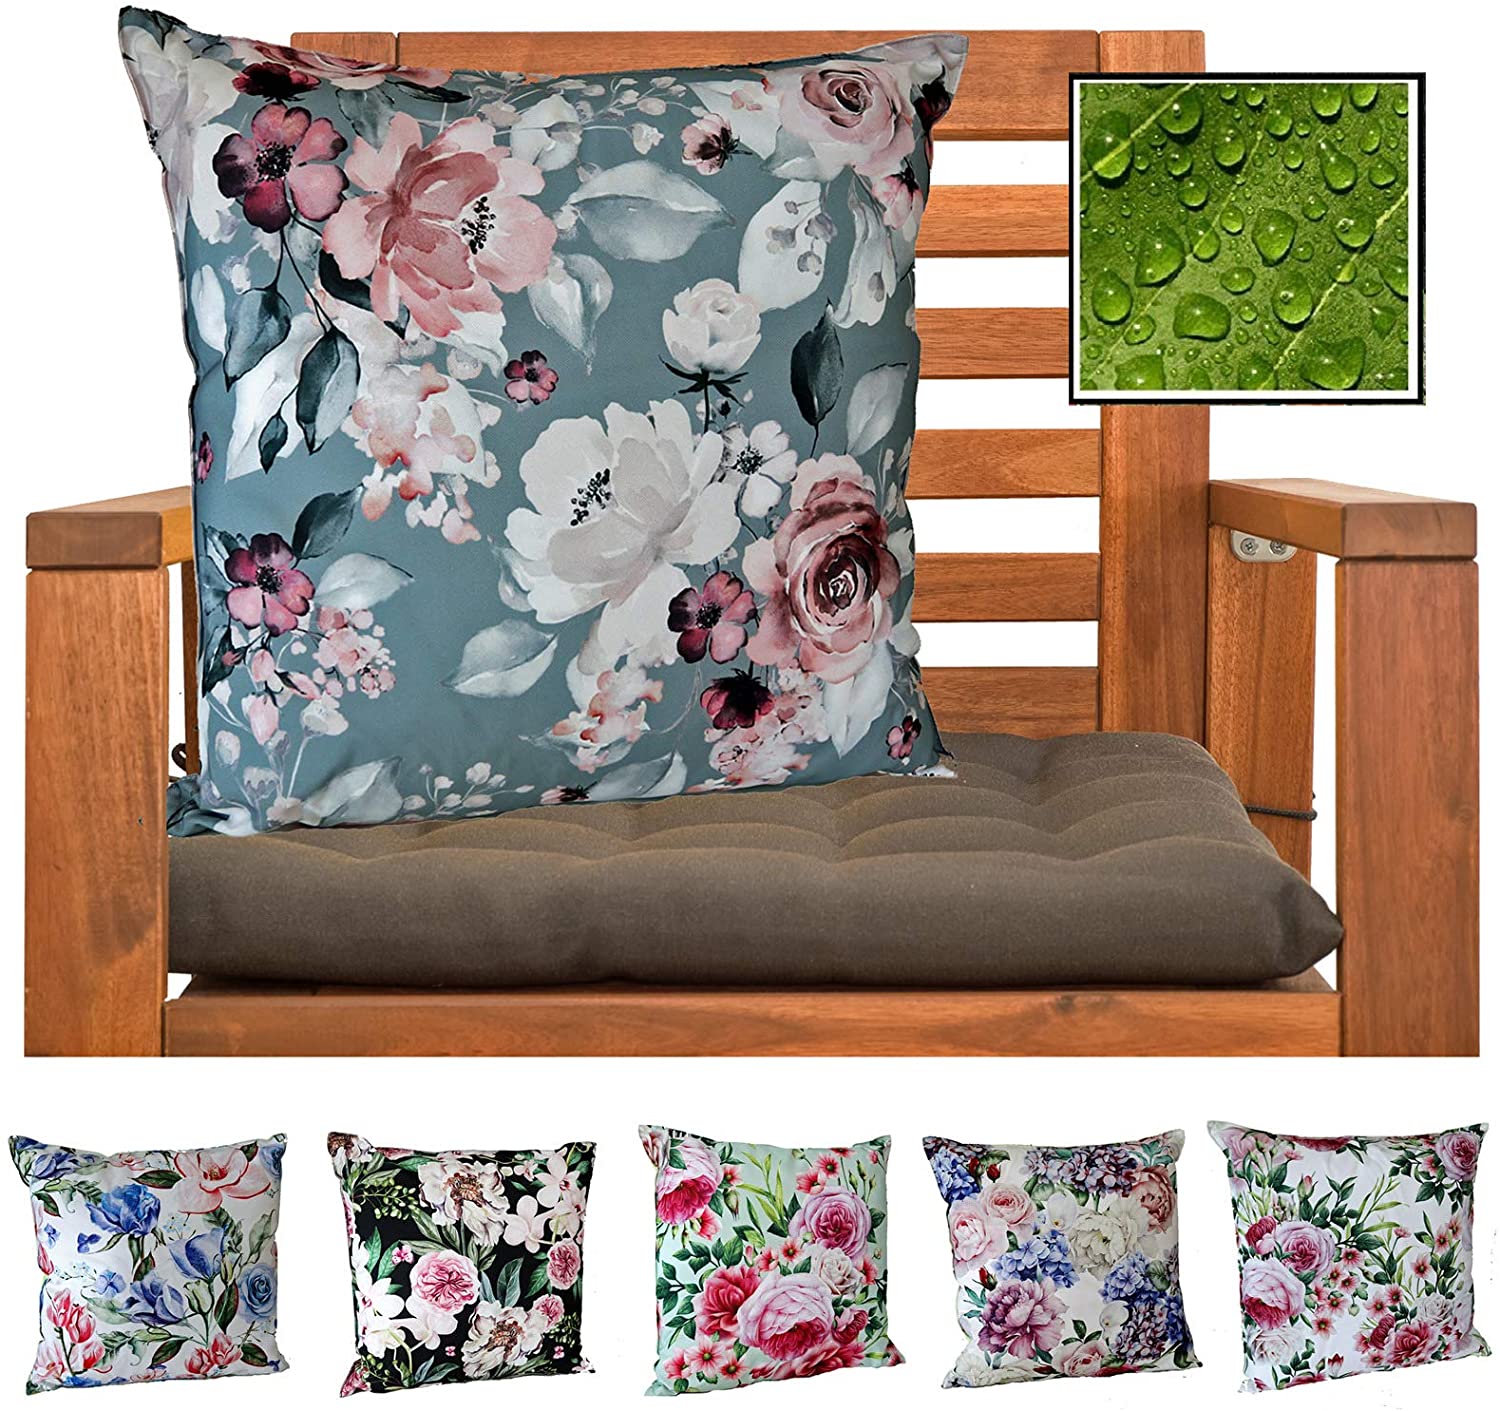 Heimtex Country ® Outdoor Pillows, Decorative Pillows, Dirt - And Water-Rep